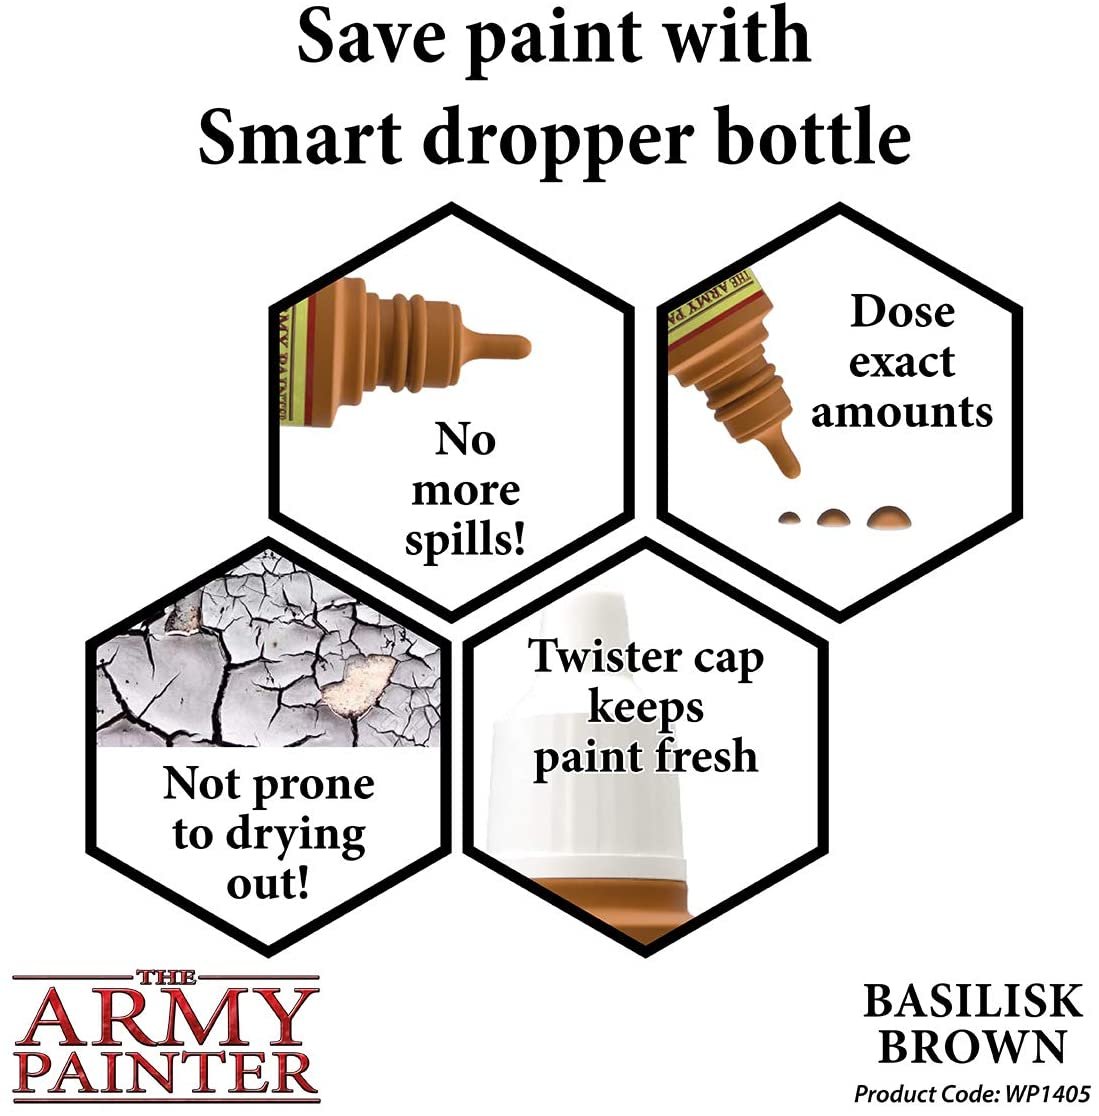 The Army Painter - Warpaints: Basilisk Brown (18ml/0.6oz)